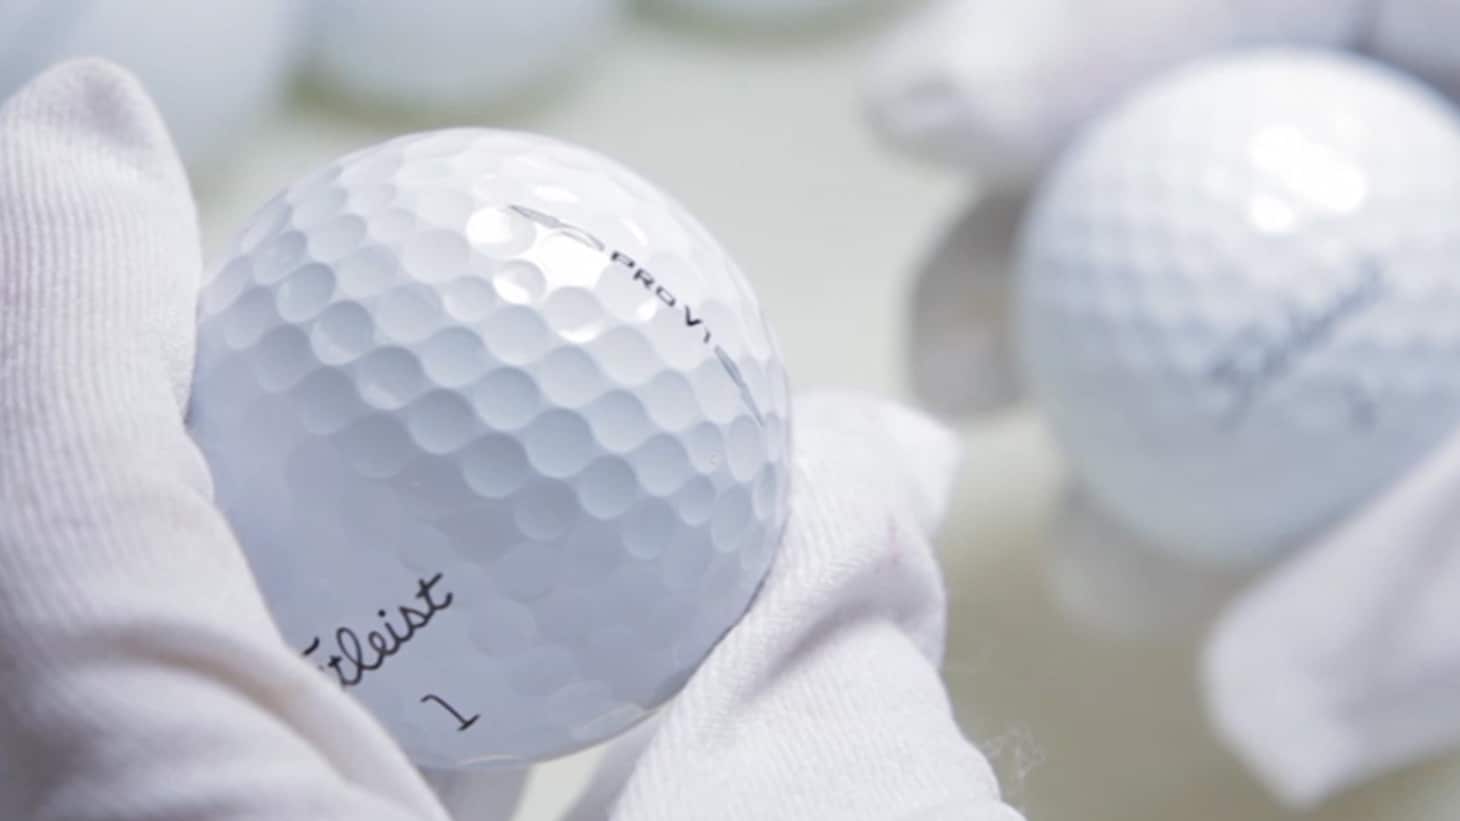  A Titleist associate hand inspects Pro V1 golf balls after the stamping process.